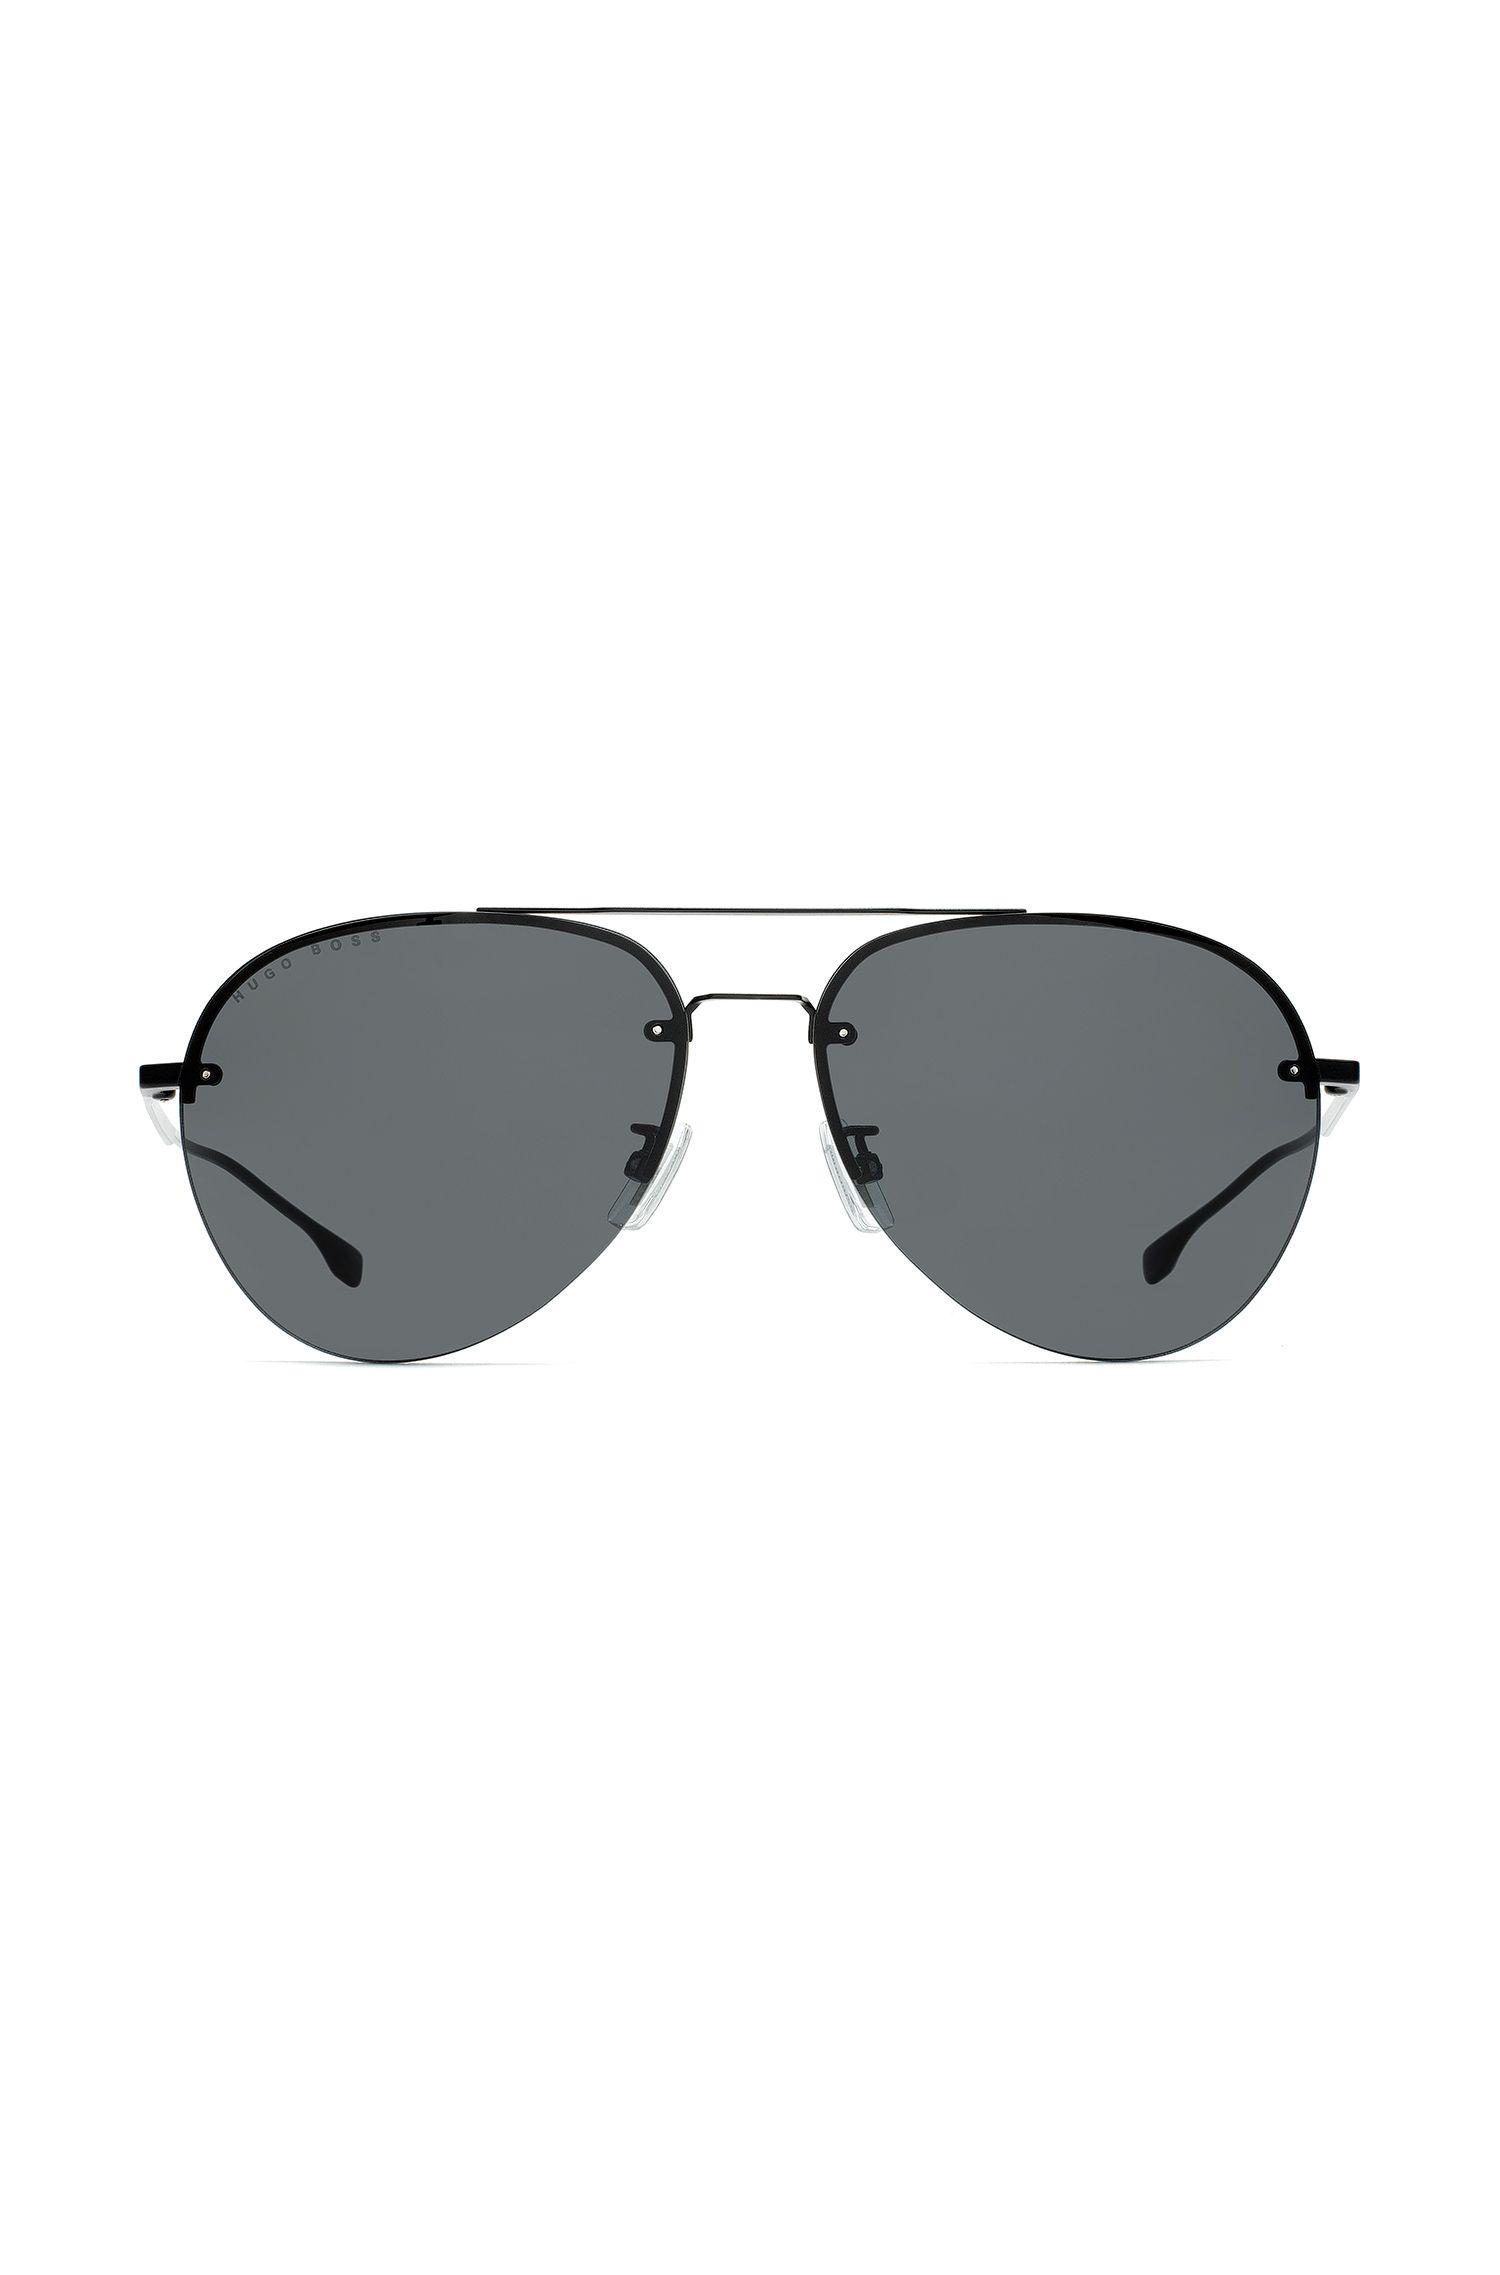 BOSS Asian-fit Sunglasses In Titanium With Double Bridge for Men - Lyst